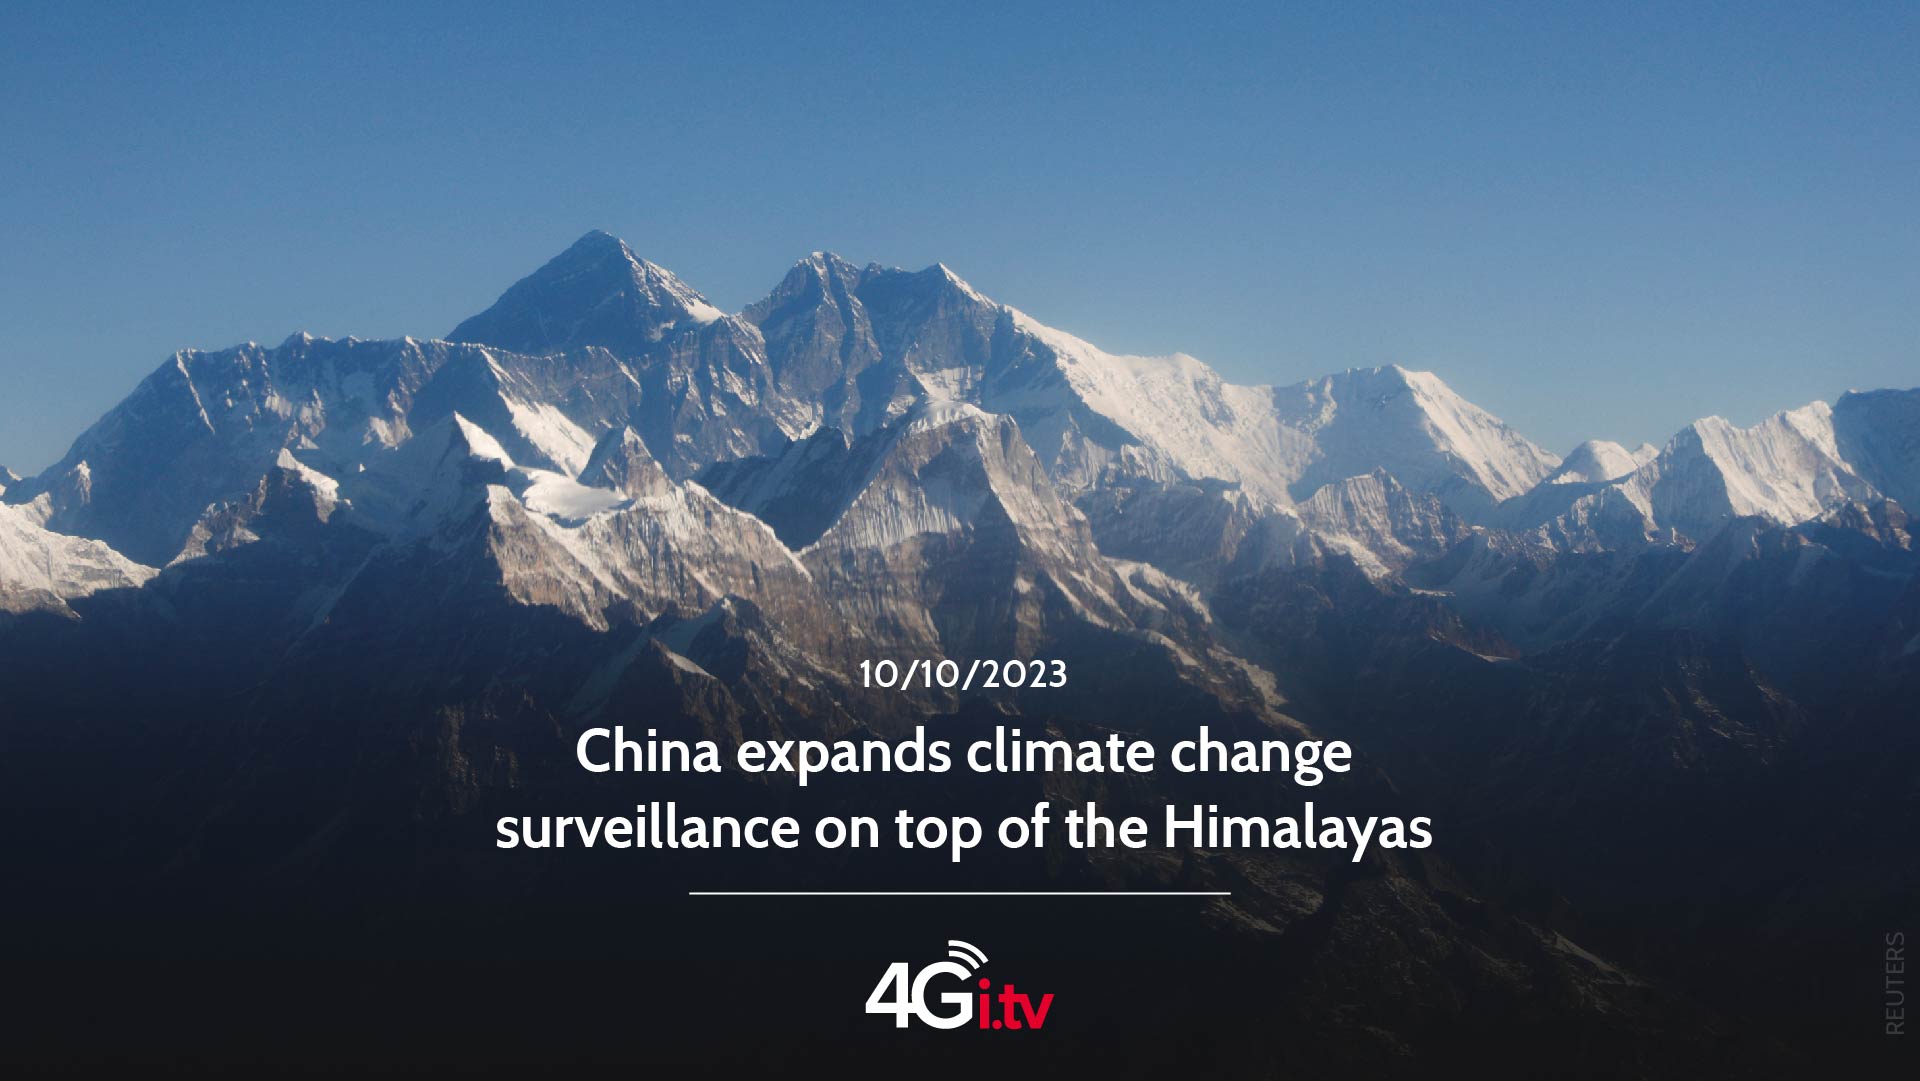 Lesen Sie mehr über den Artikel China expands climate change surveillance on top of the Himalayas